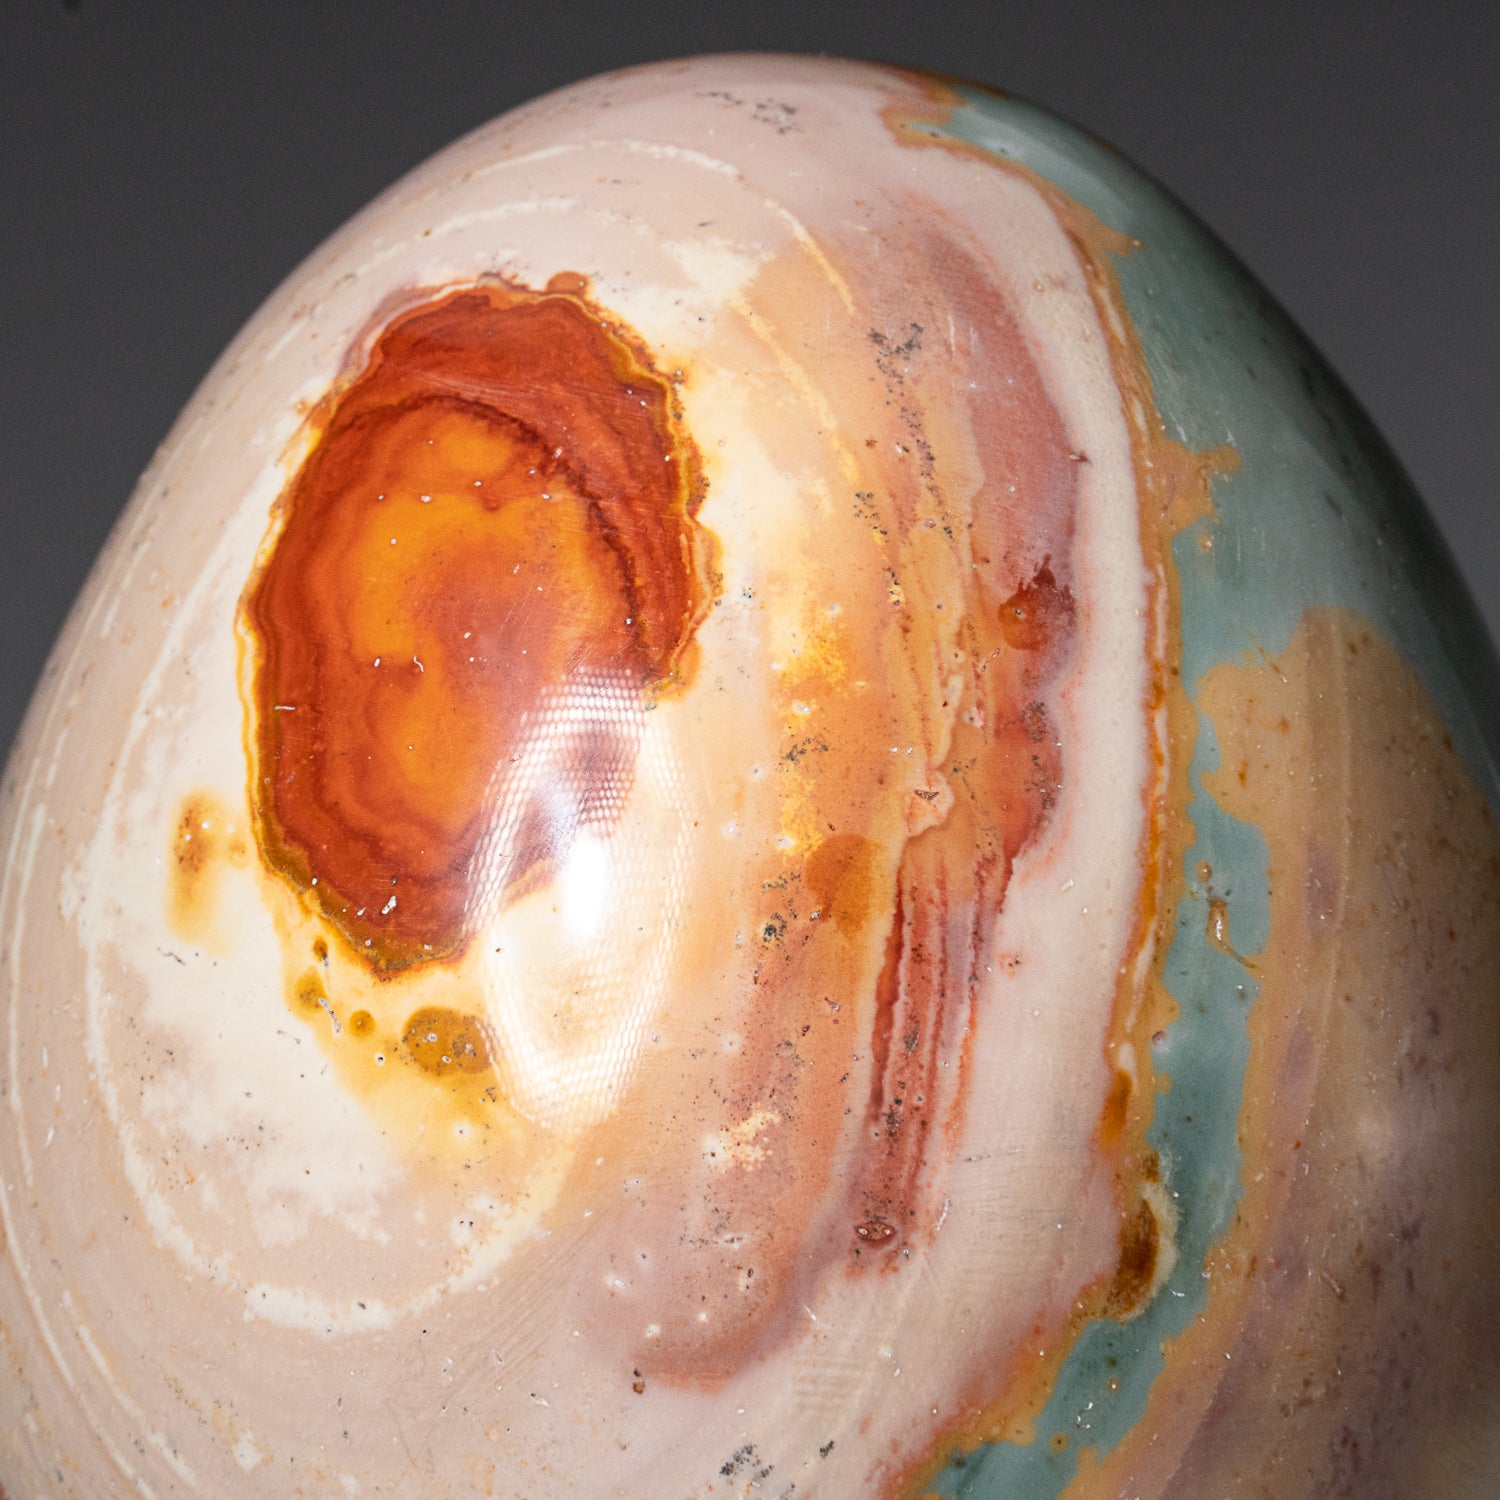 Genuine Polished Polychrome Egg from Madagascar (1.6 lbs)